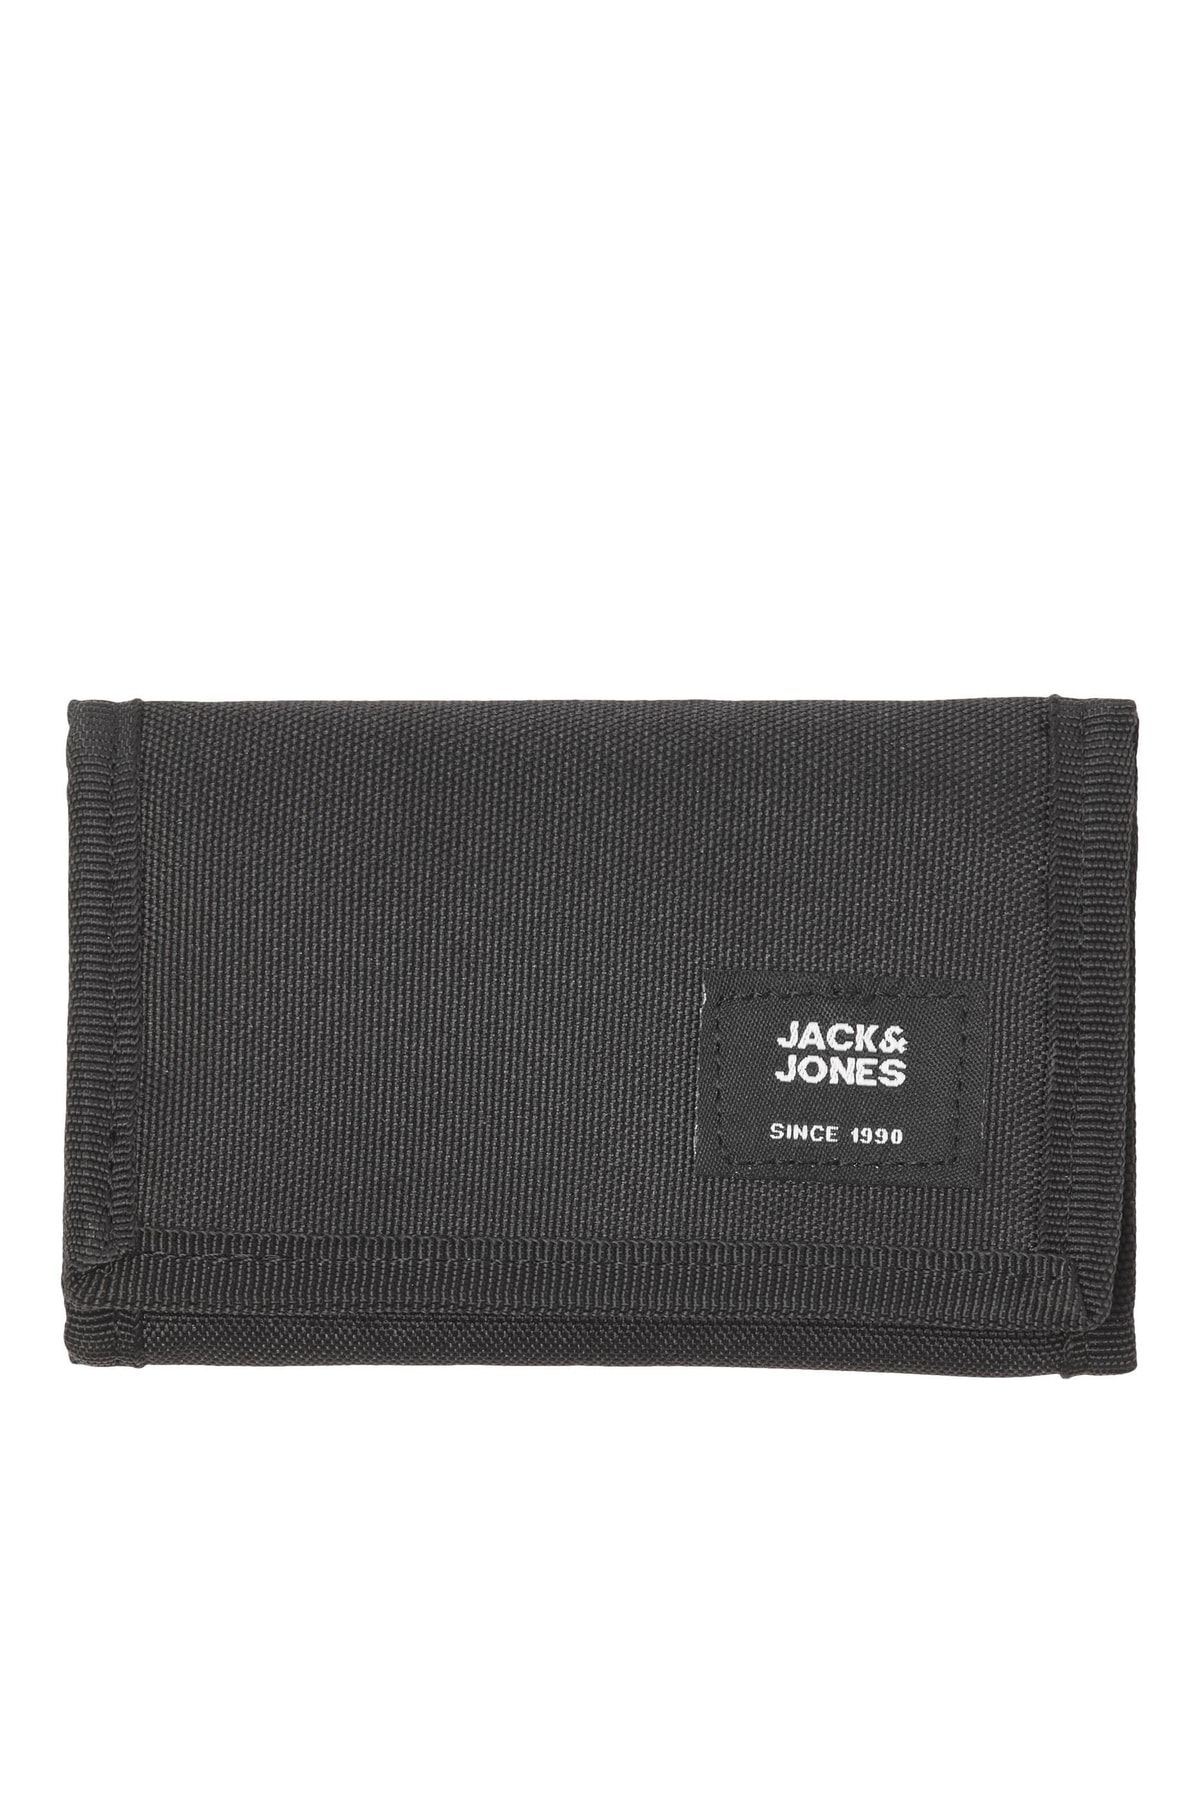 Jack & Jones Jack Jones Eastside Wallet Erkek Siyah Cüzdan 12228262-02